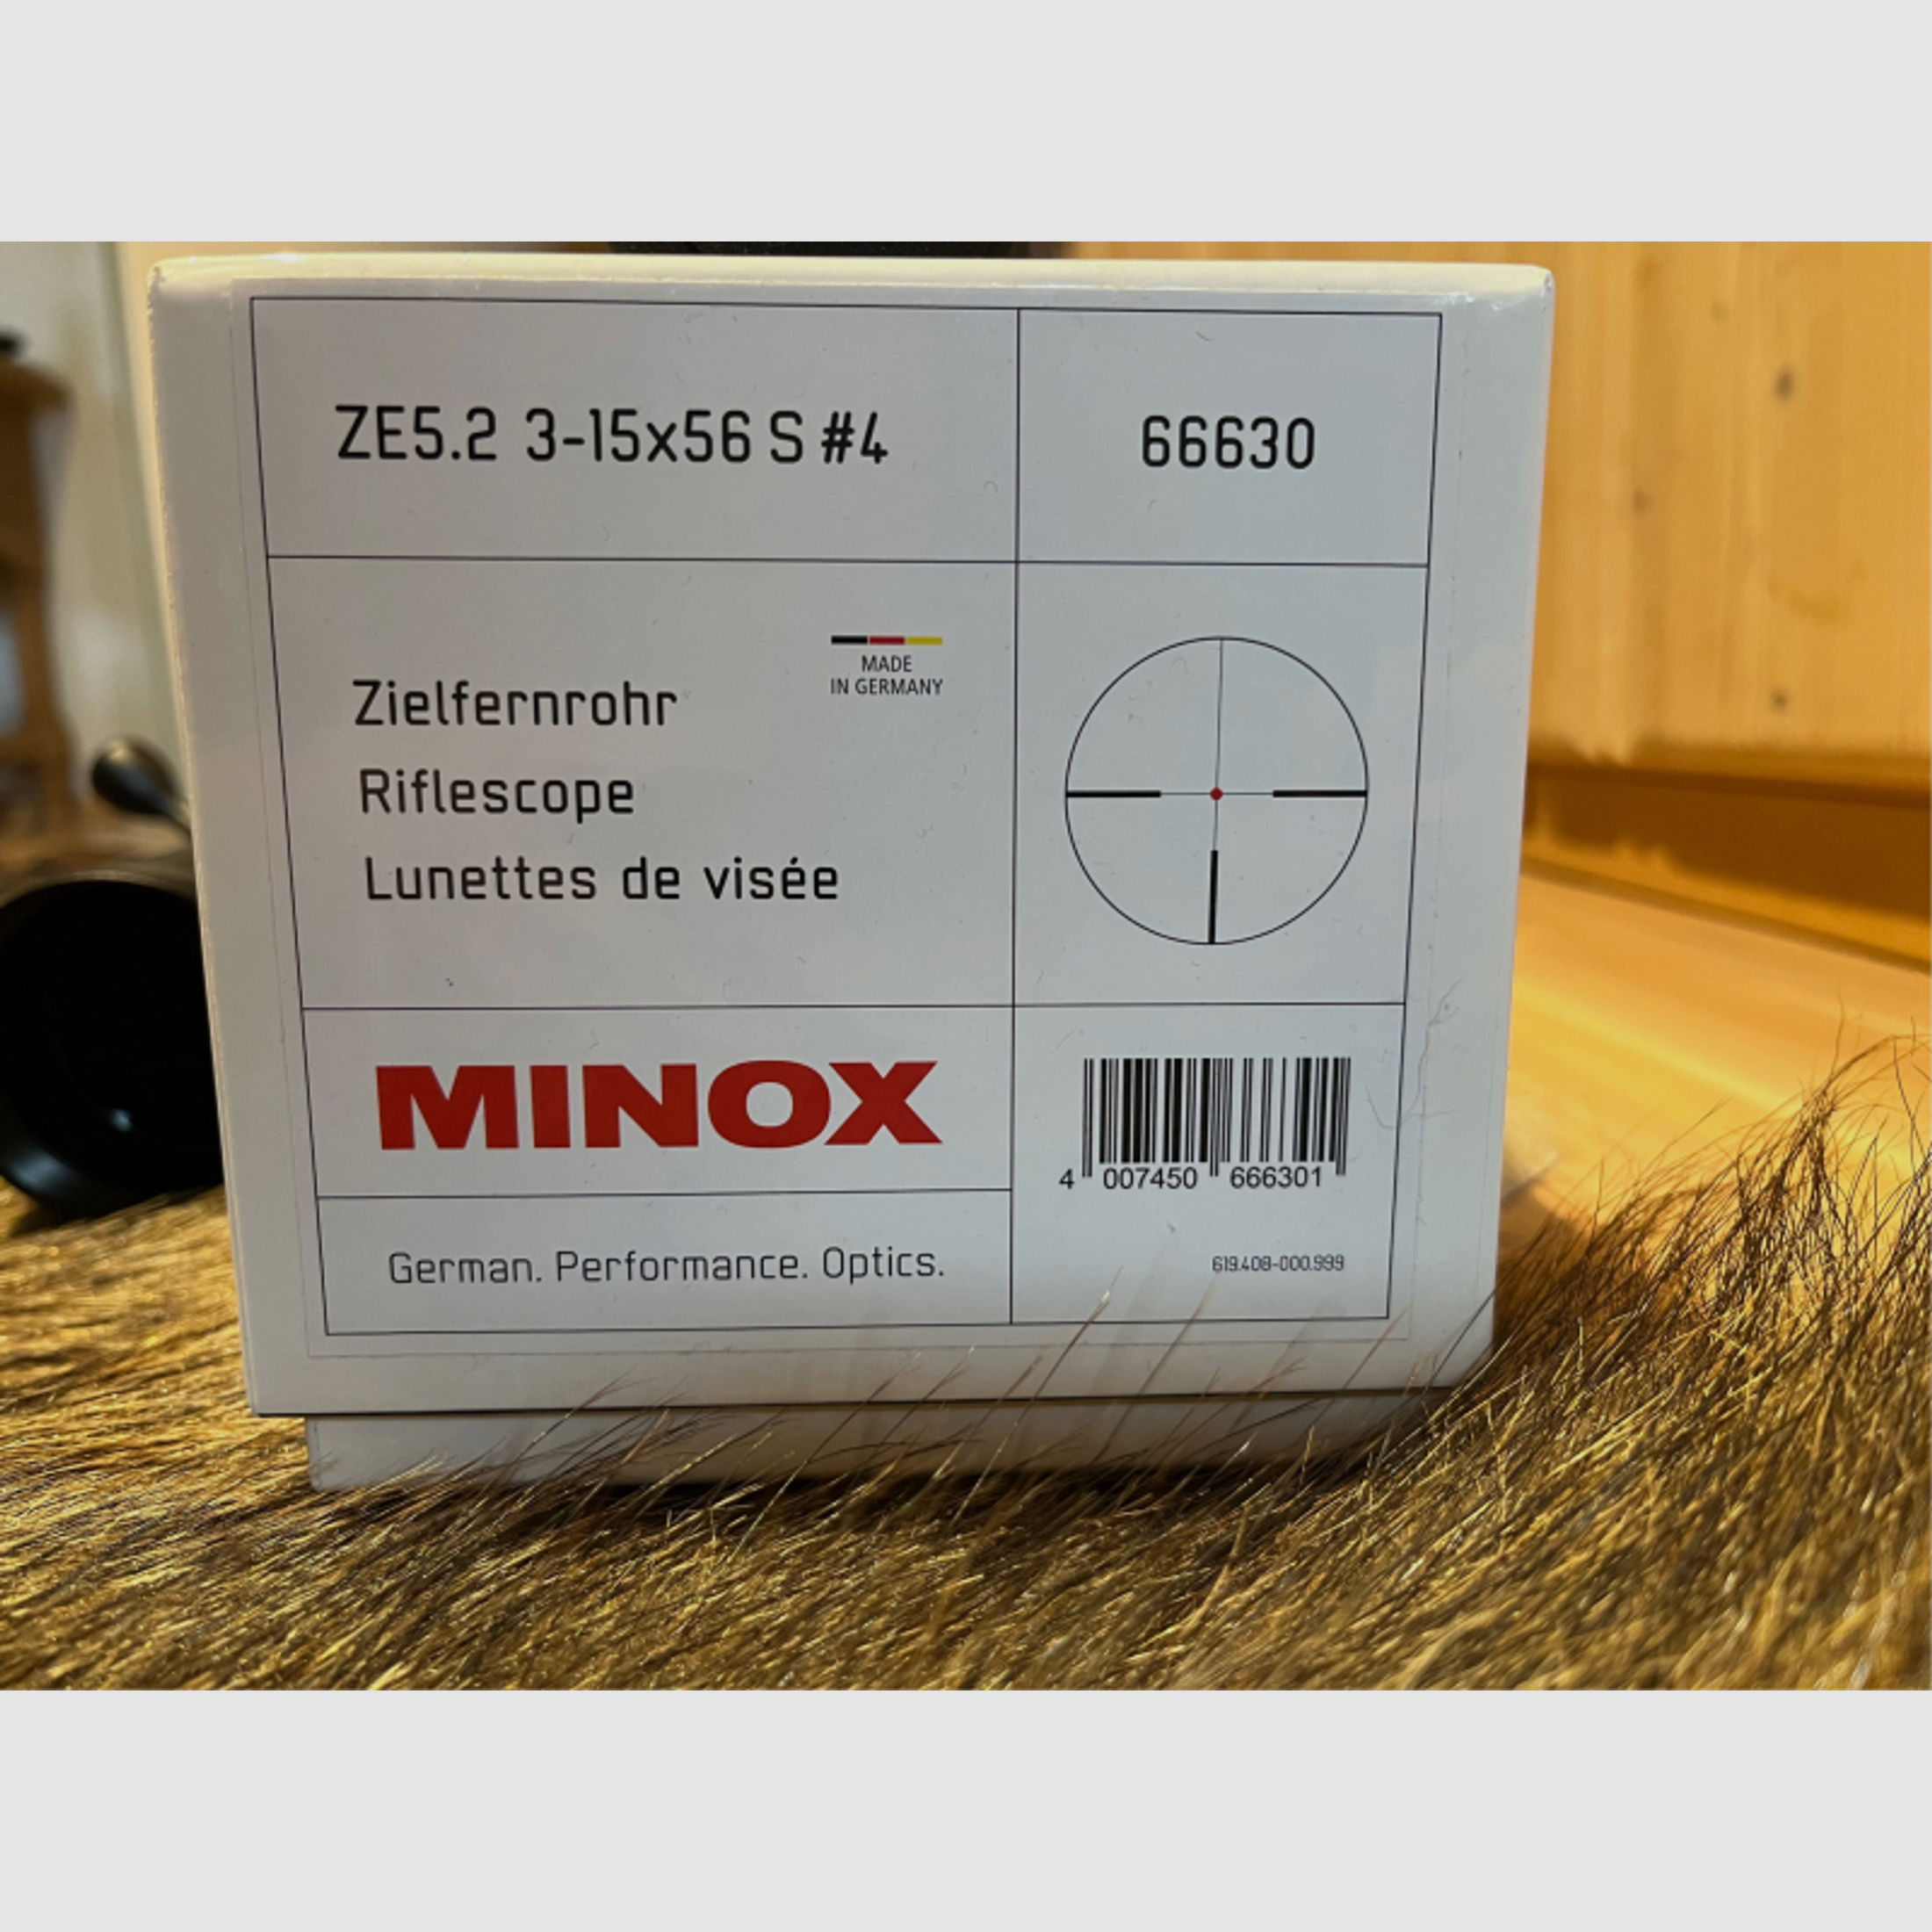 Sauer 101 GTI .308 51 + Minox ZE 5.2 3-15x56